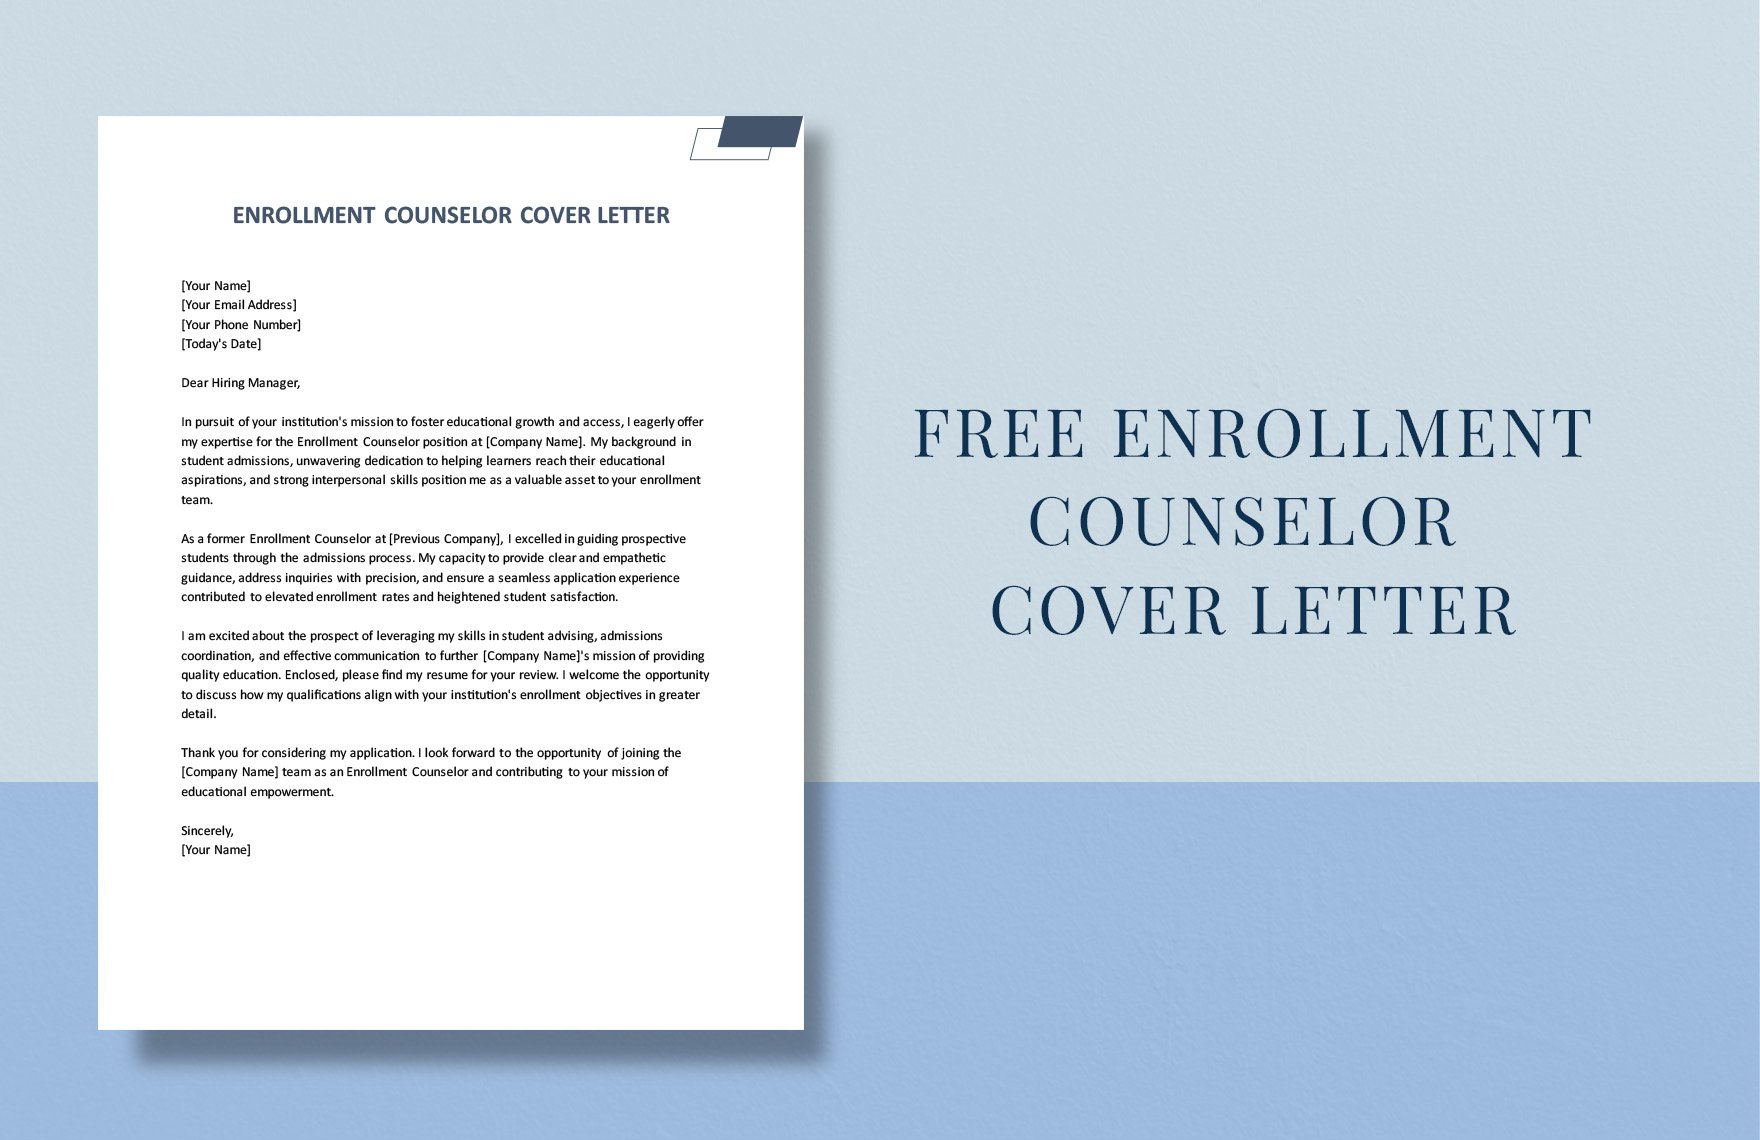 Enrollment Counselor Cover Letter in Word, Google Docs, PDF